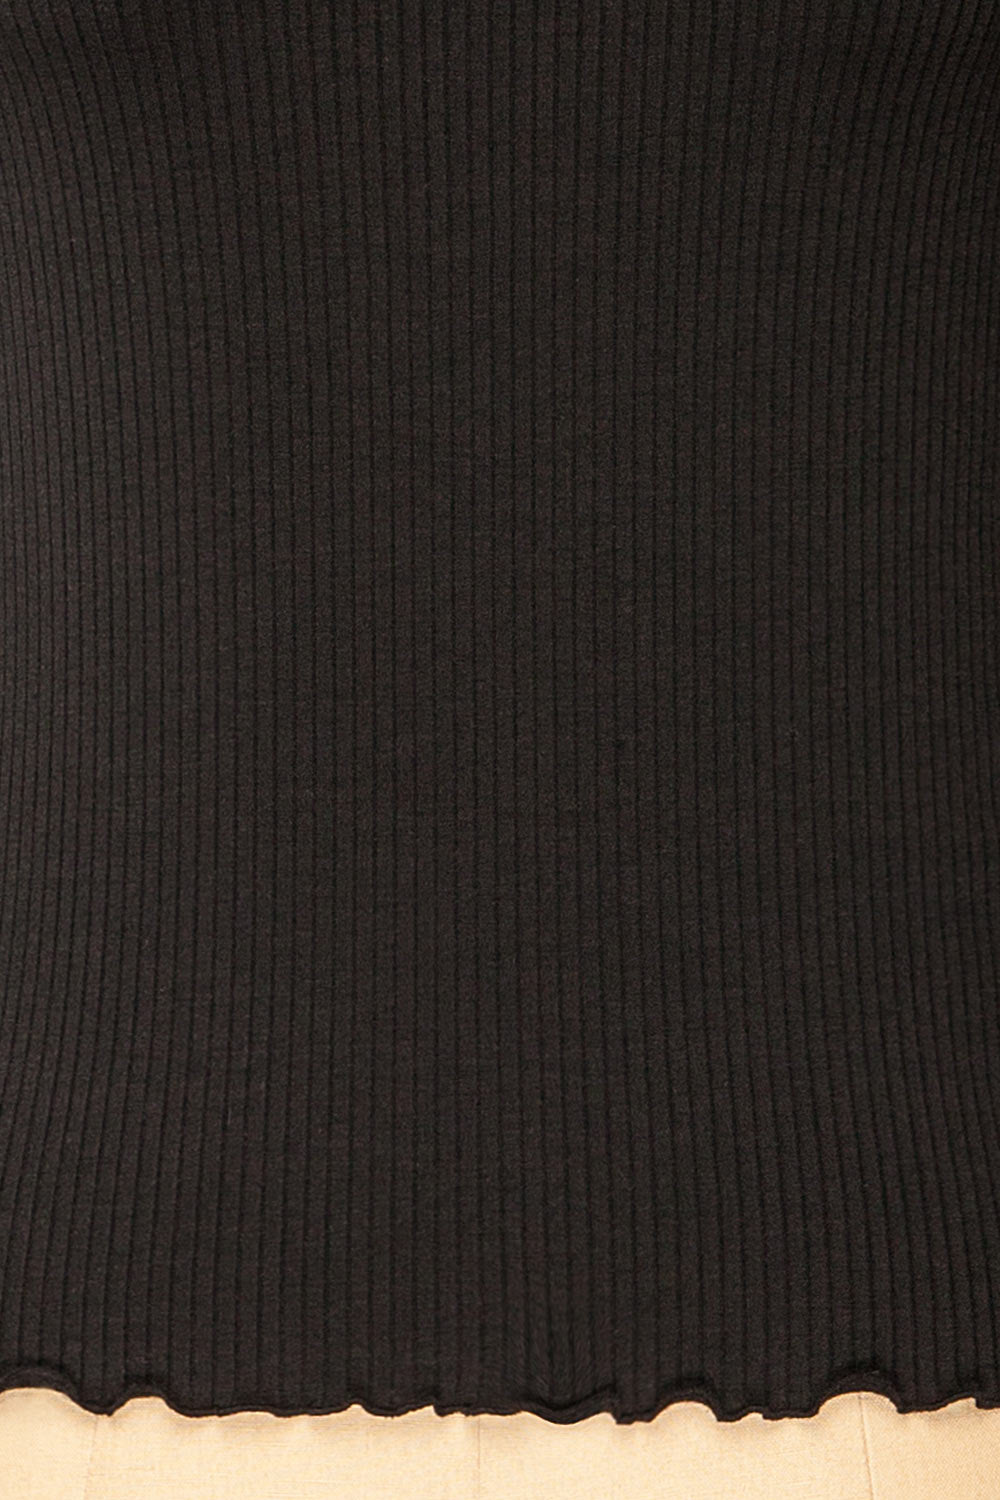 Palencia Black Ribbed Long Sleeve Top w/ Frills| La petite garçonne fabric 